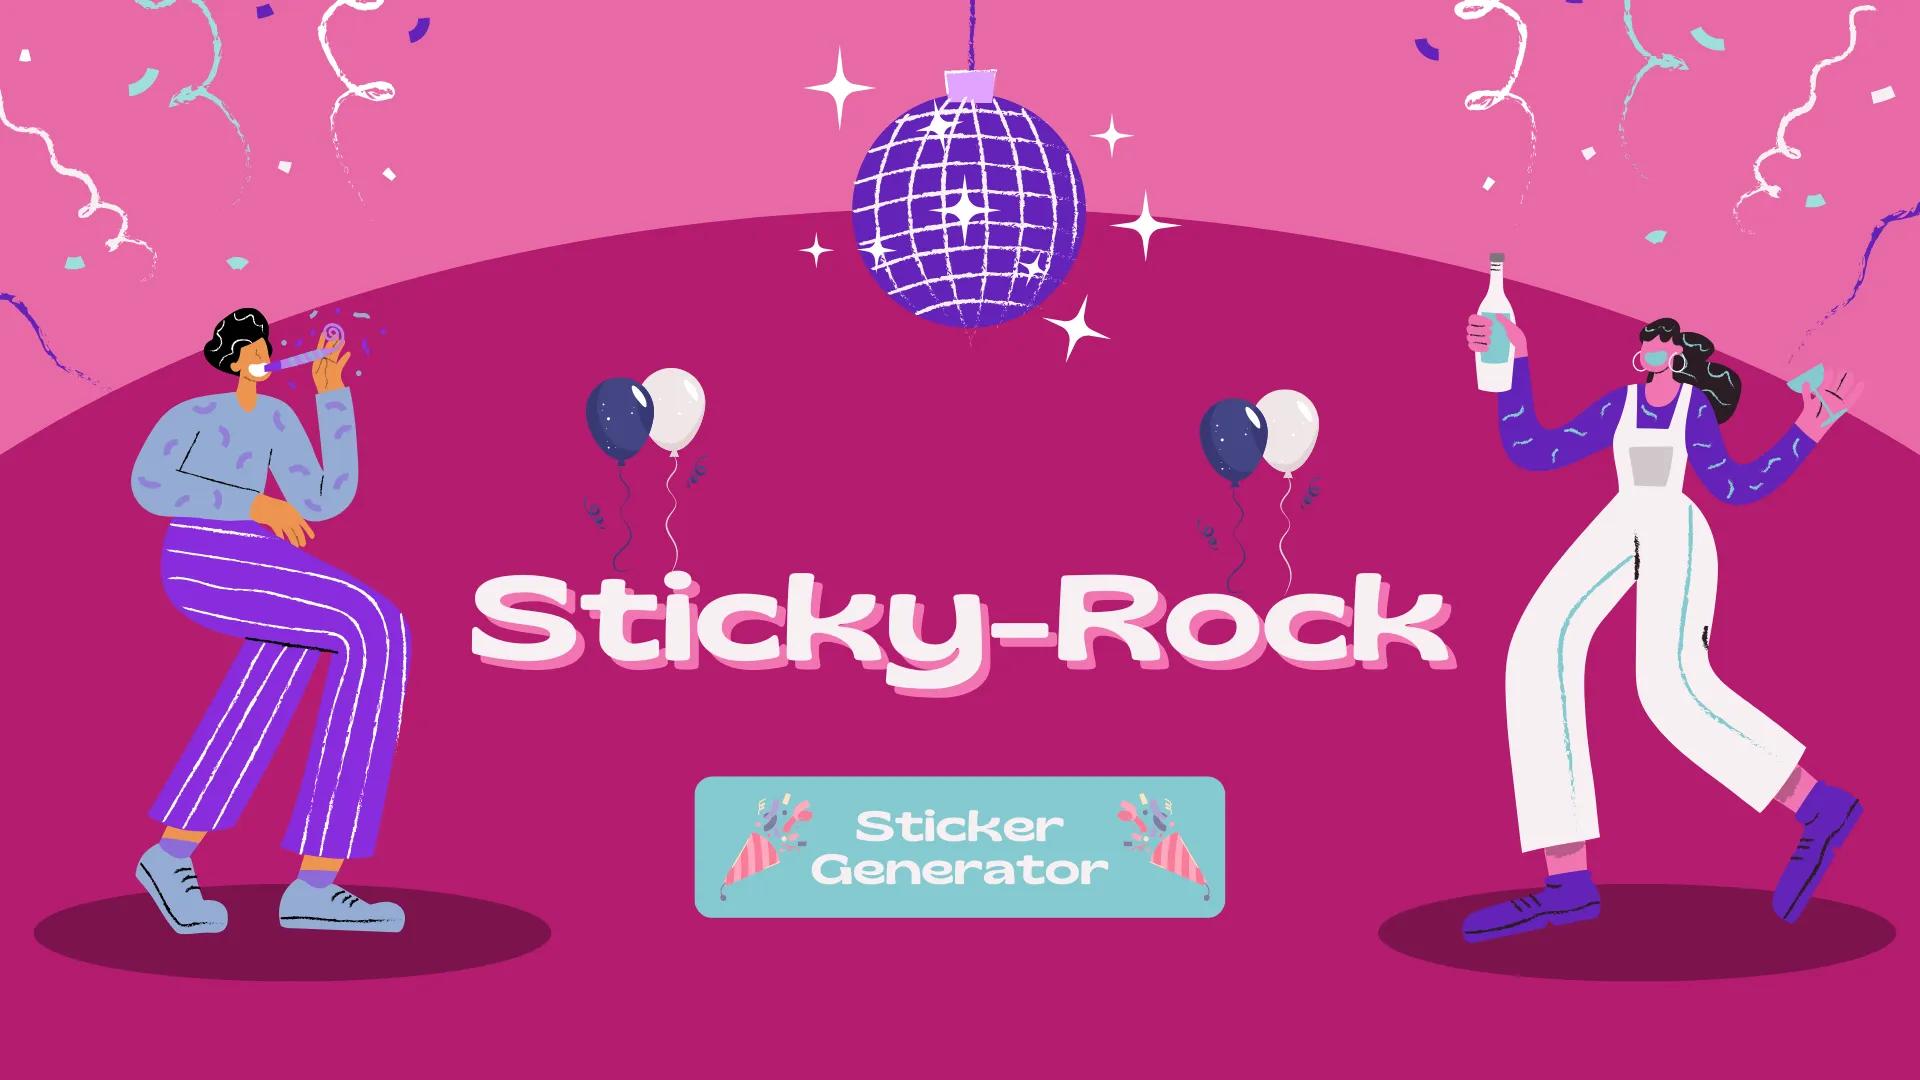 Sticky-Rock - Sticker Generator Developed in AWS Partyrock